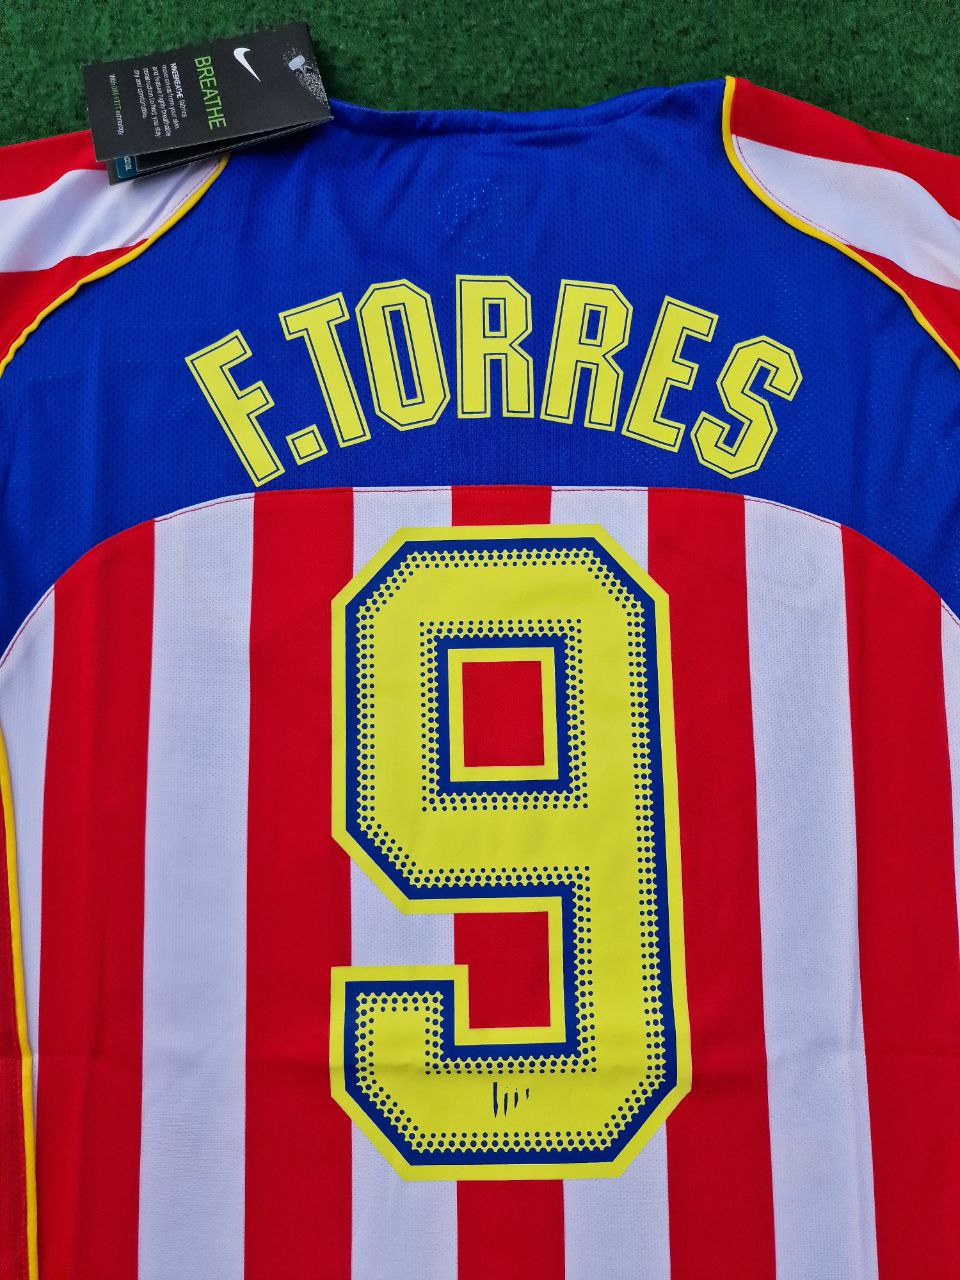 Fernando Torres Atletico Madrid Retro Football Jersey